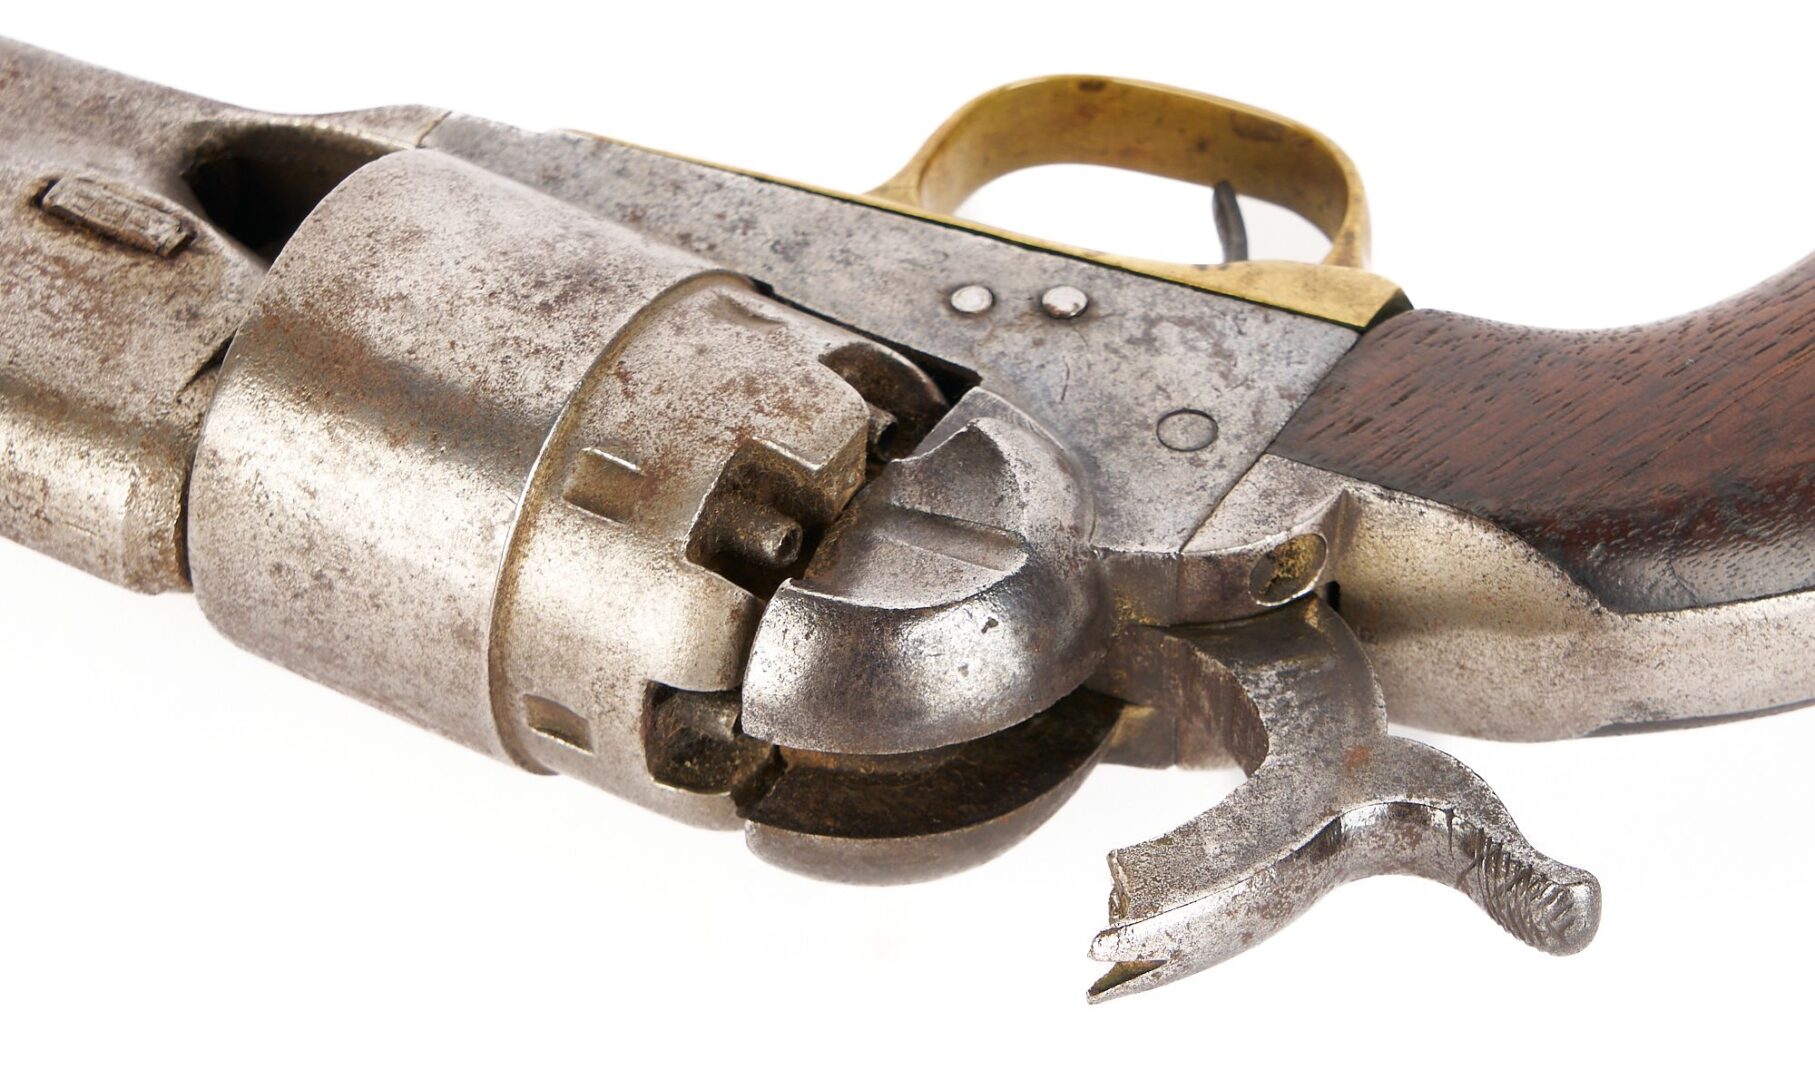 Lot 544: Colt Army Model 1860 Revolver